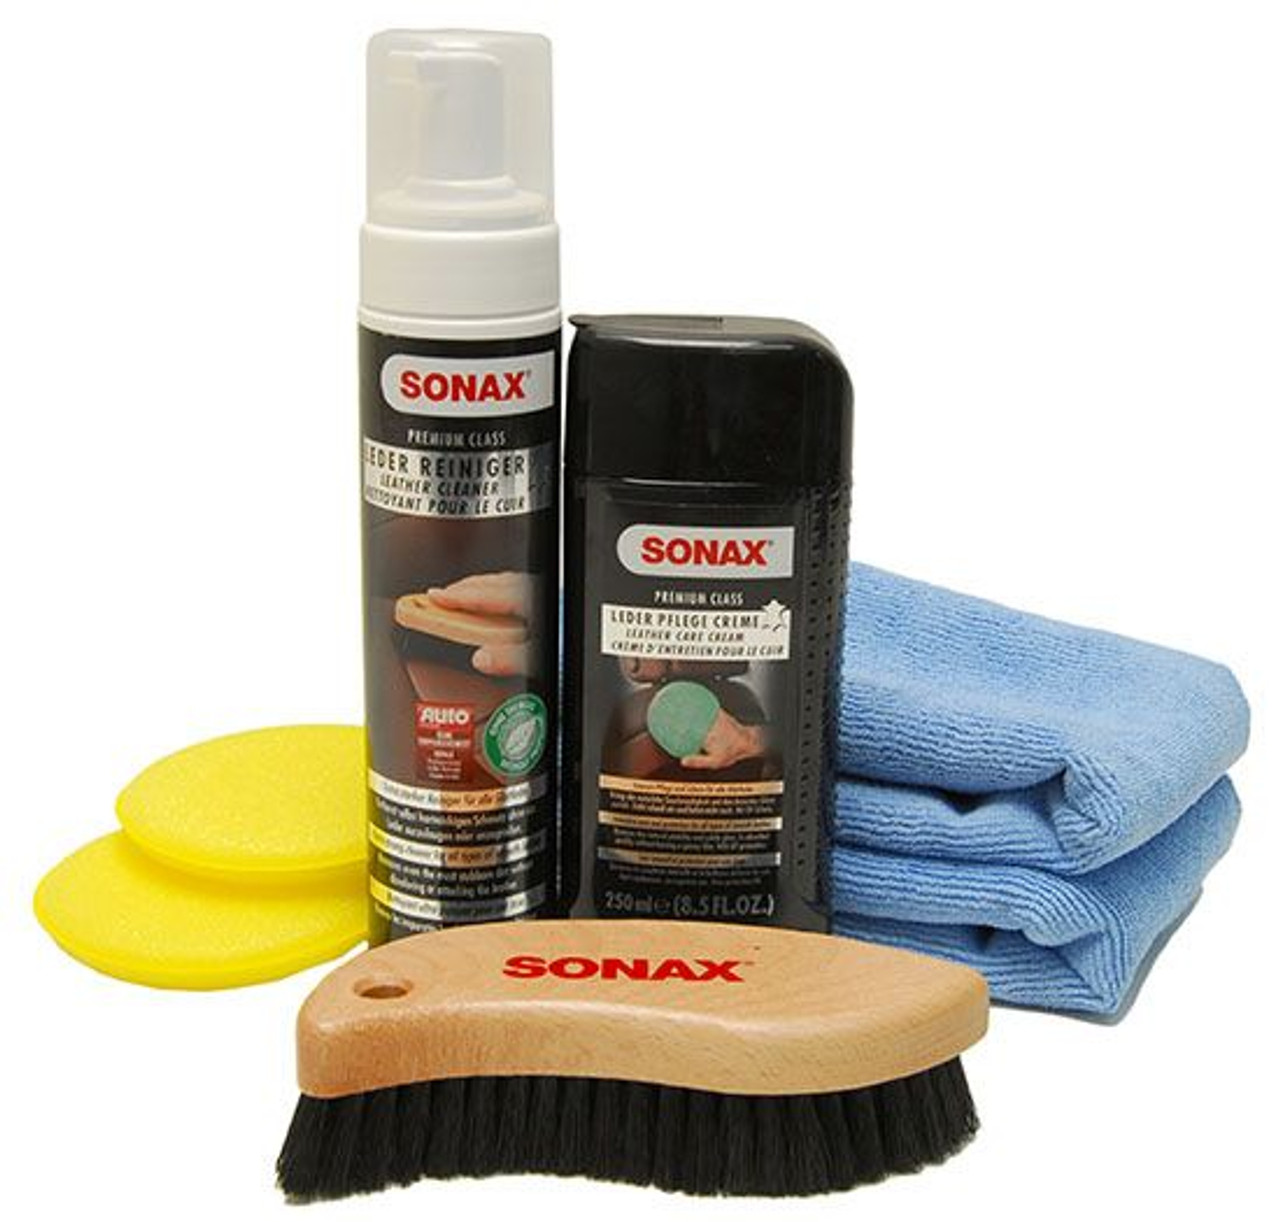 SONAX Premium Class Leather Care Kit